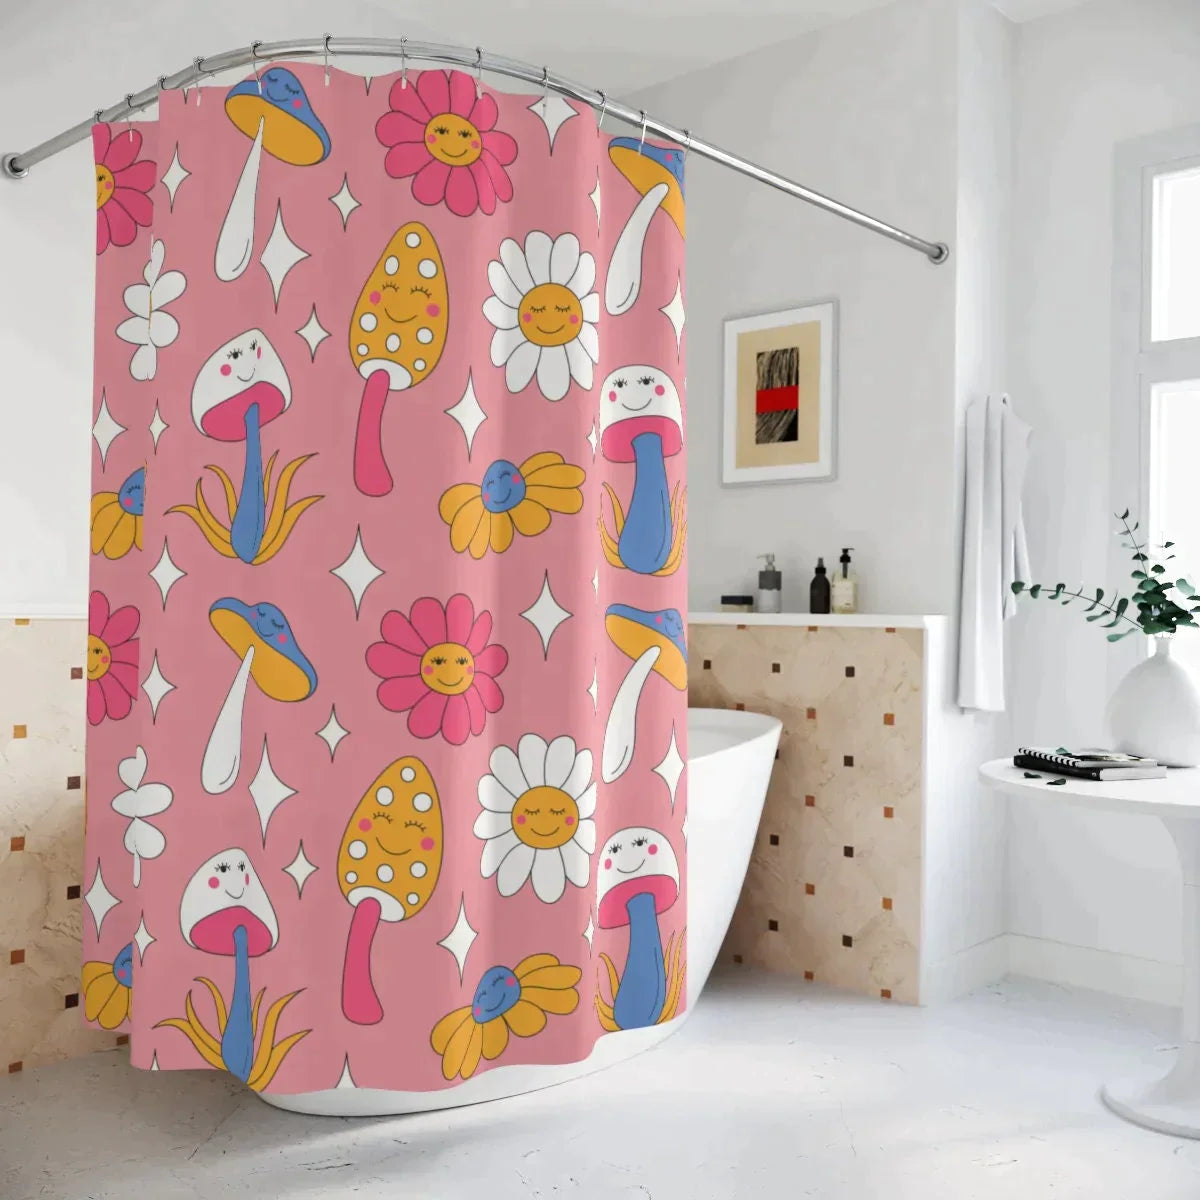 Boho Shower Curtain, Bobo Pink Mushroom Curtain, Daisy Bathroom Accessories, Housewarming Gift, Hippie Decor, Extra Long Shower Curtain